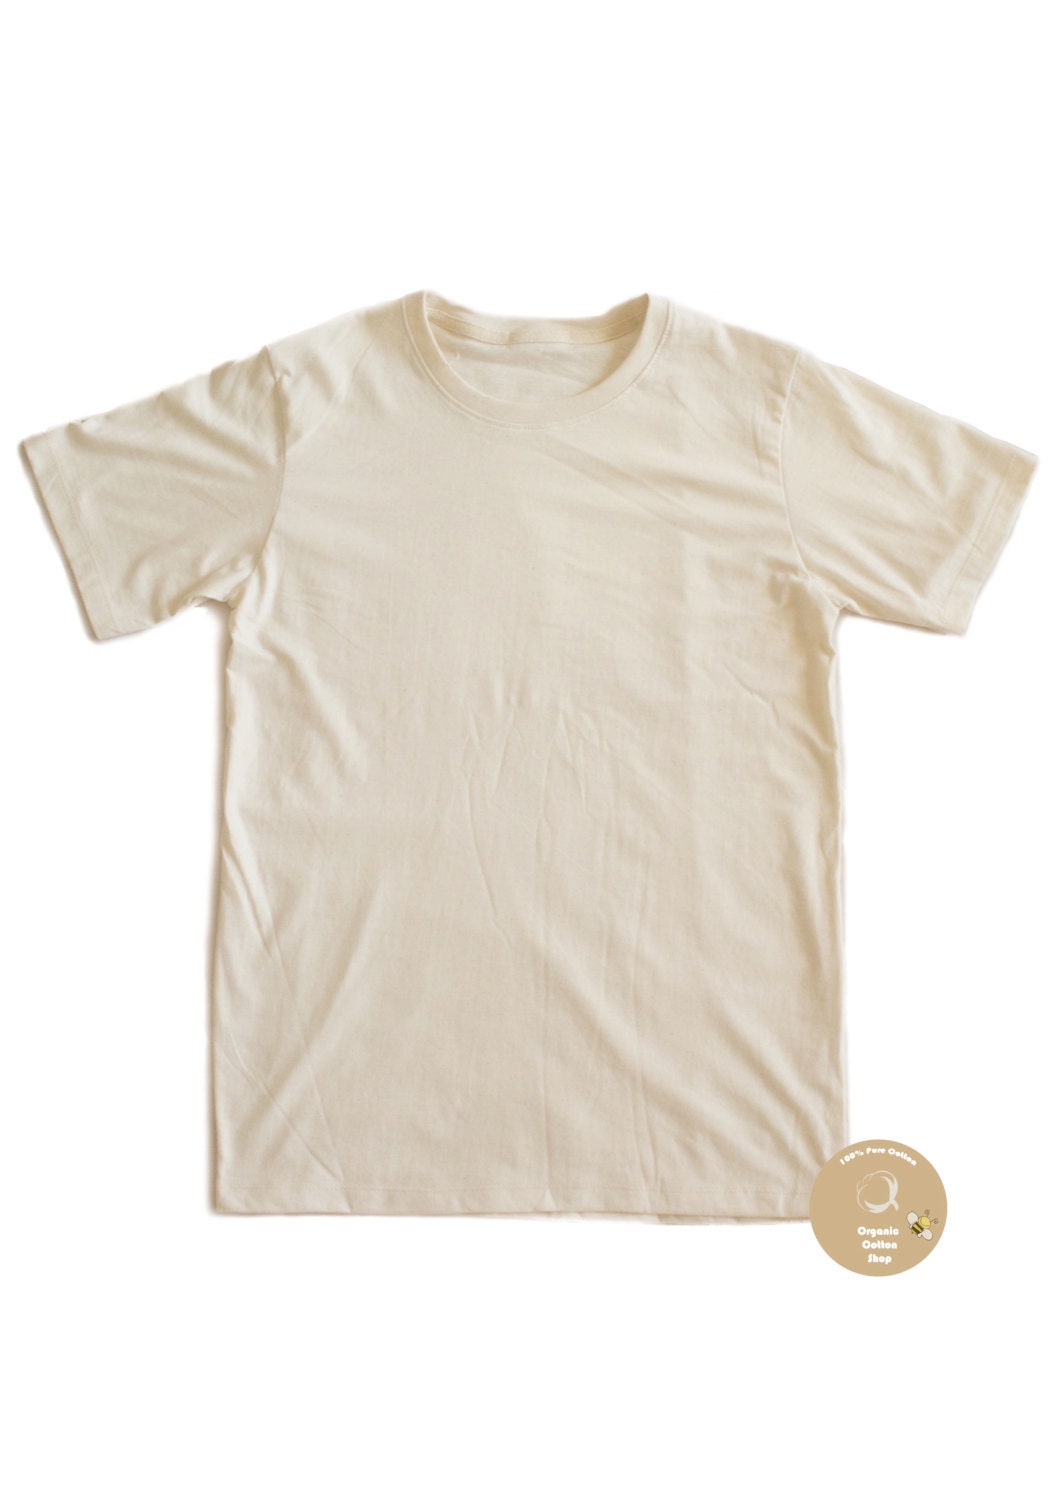 Plain T-shirt 100% Organic Cotton and Non-toxic - Etsy